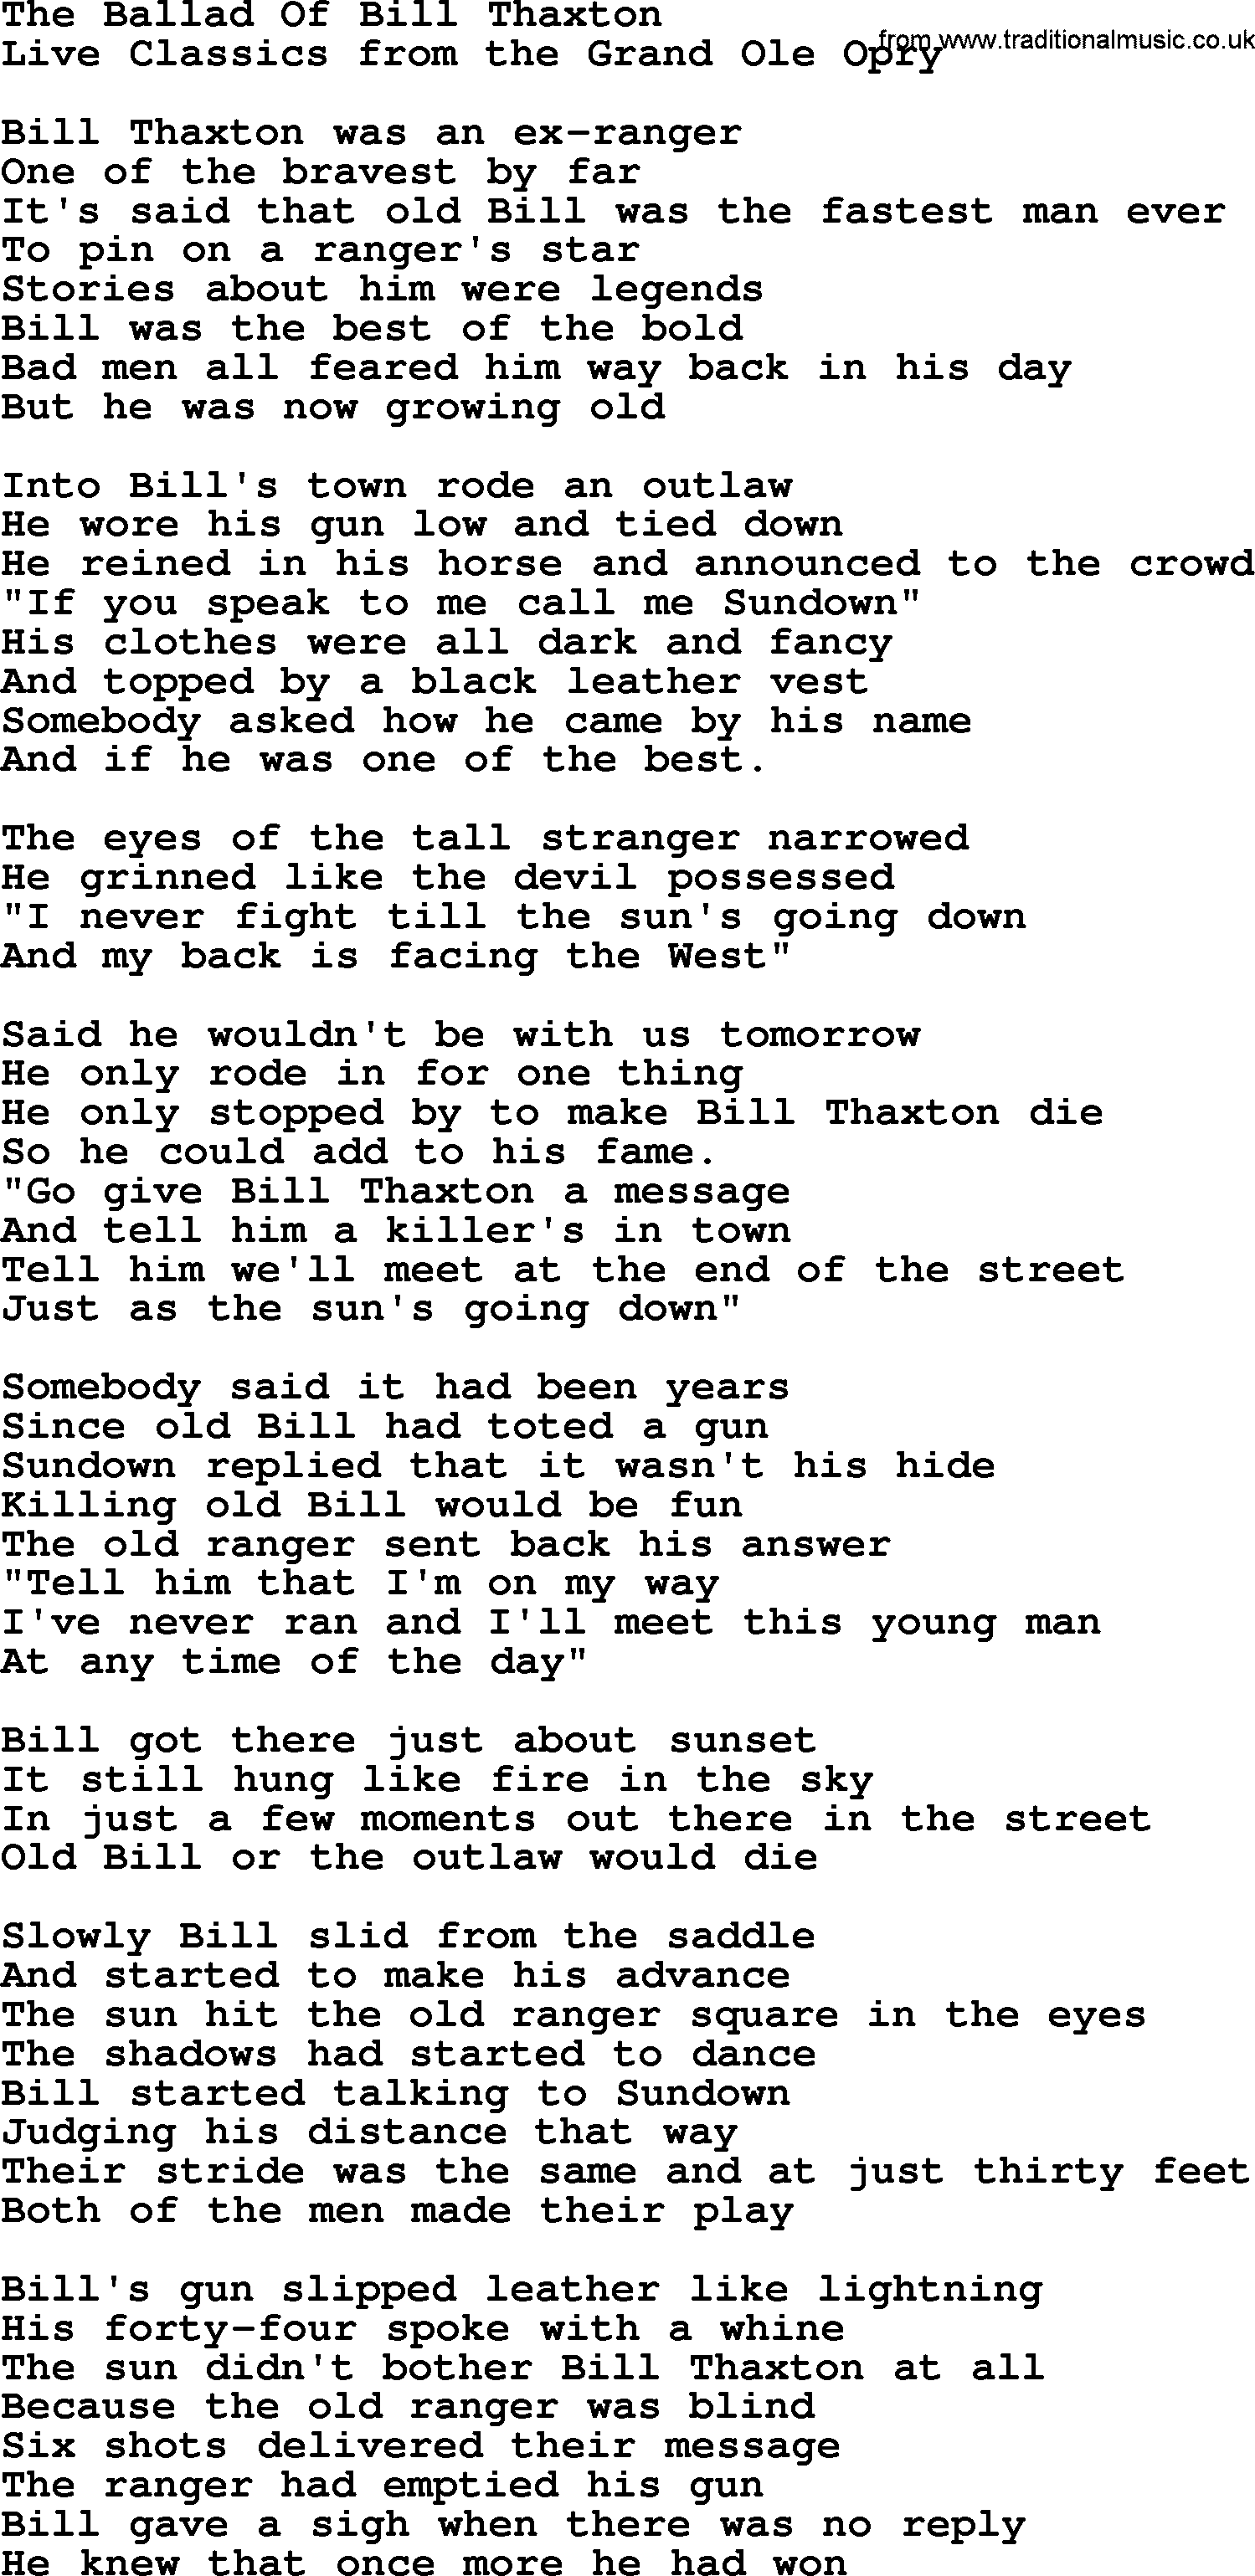 Marty Robbins song: The Ballad Of Bill Thaxton, lyrics